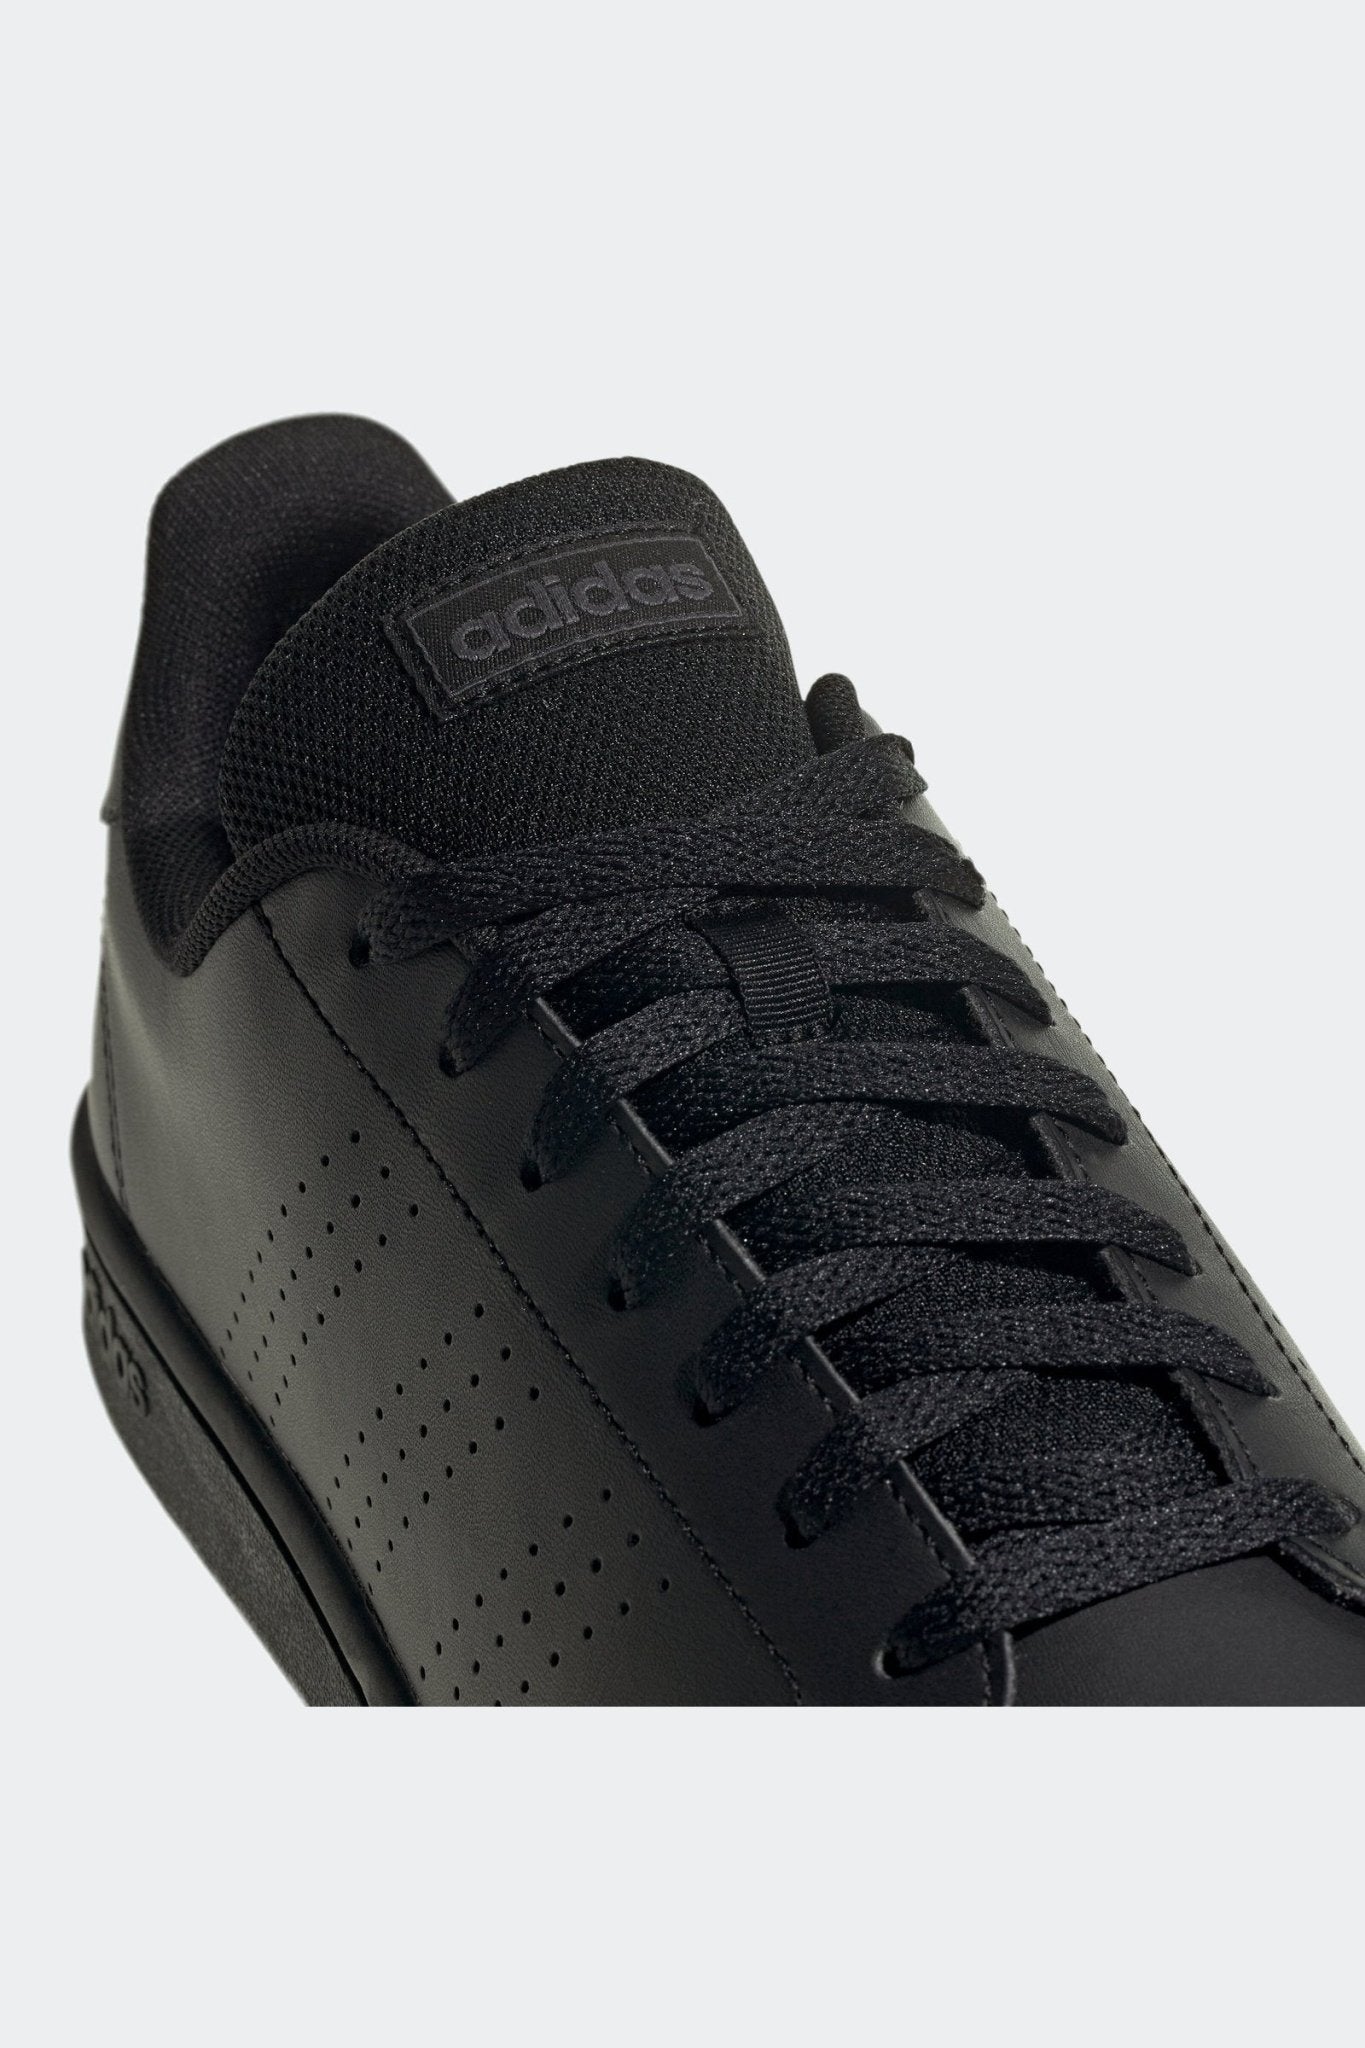 ADIDAS - נעלי סניקרס לגבר ADVANTAGE BASE בצבע שחור - MASHBIR//365